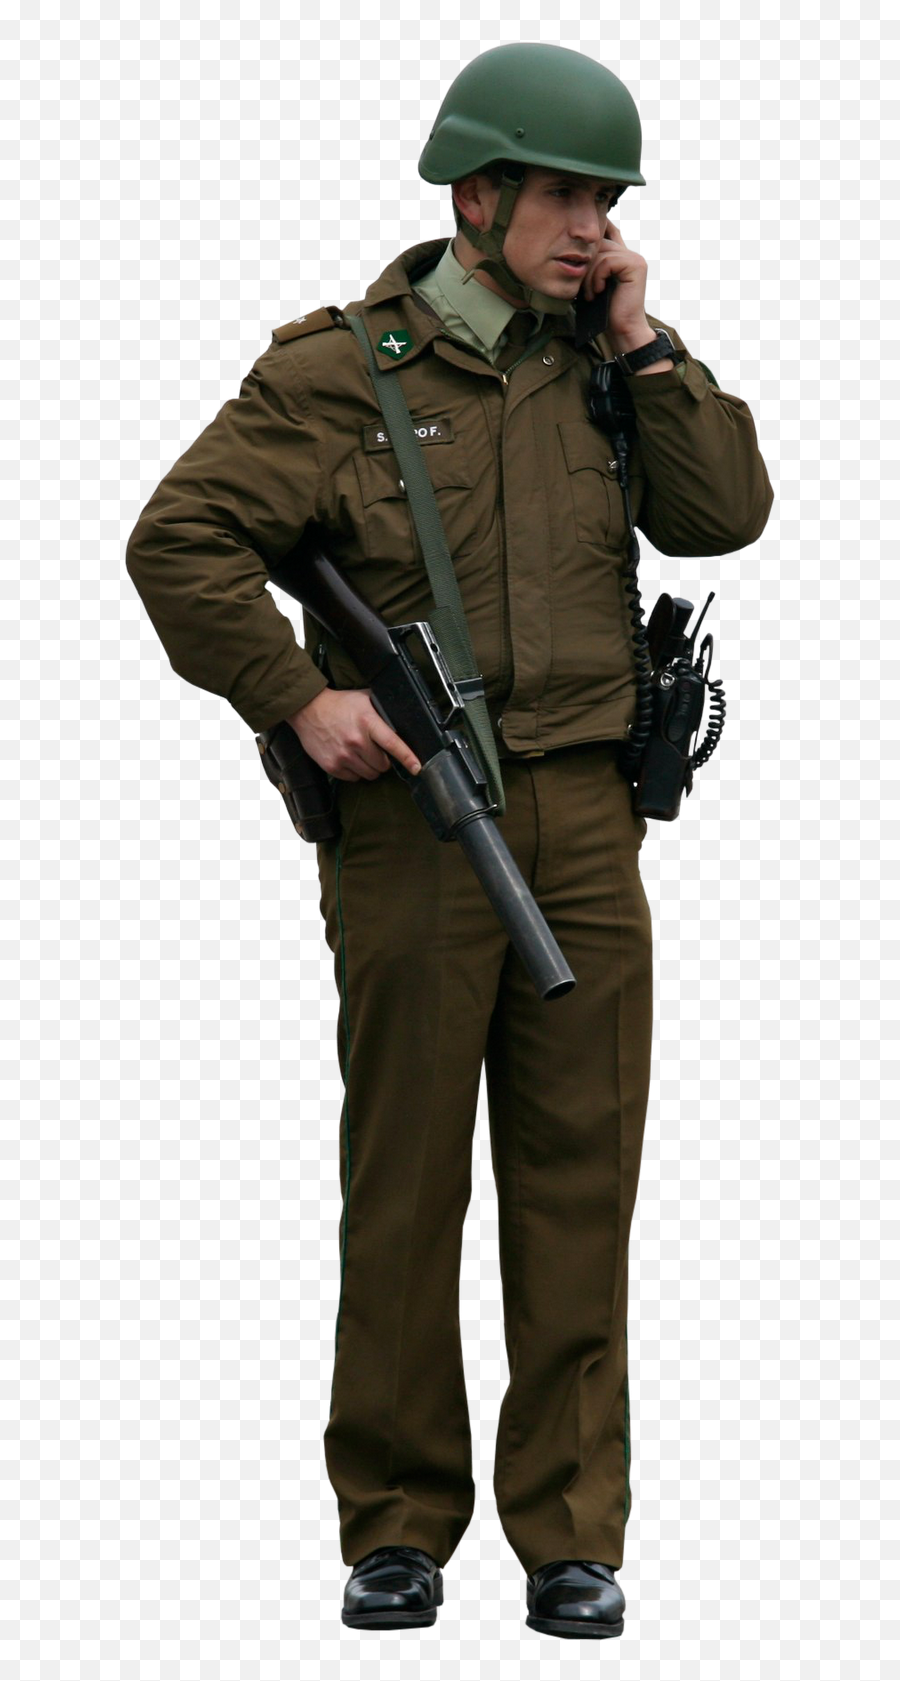 Soldier Png - Soldier,Soldier Transparent Background